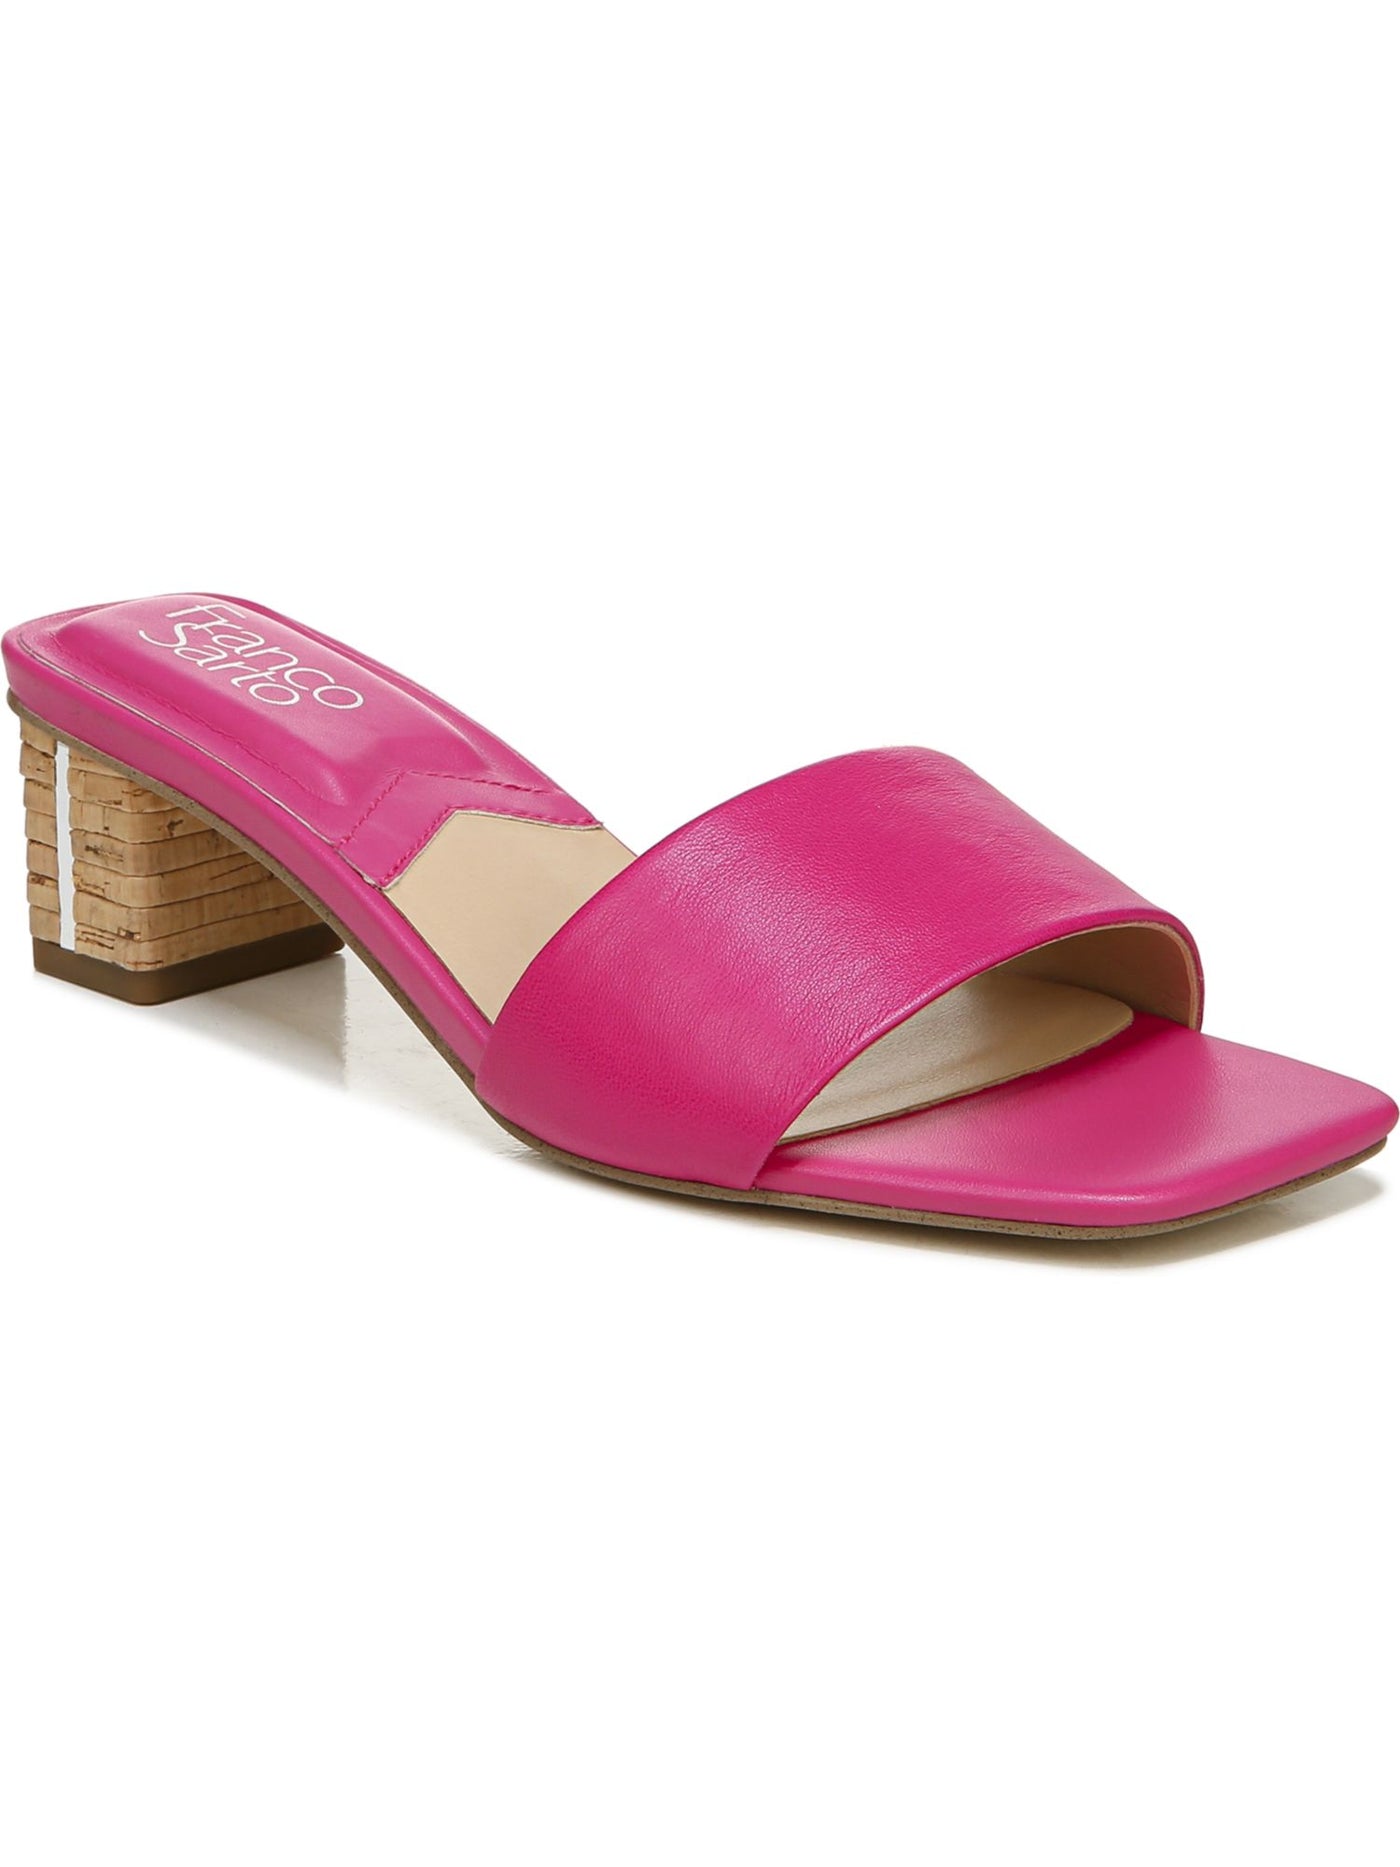 FRANCO SARTO Womens Pink Padded Cruella Open Toe Block Heel Slip On Leather Slide Sandals Shoes 7.5 M